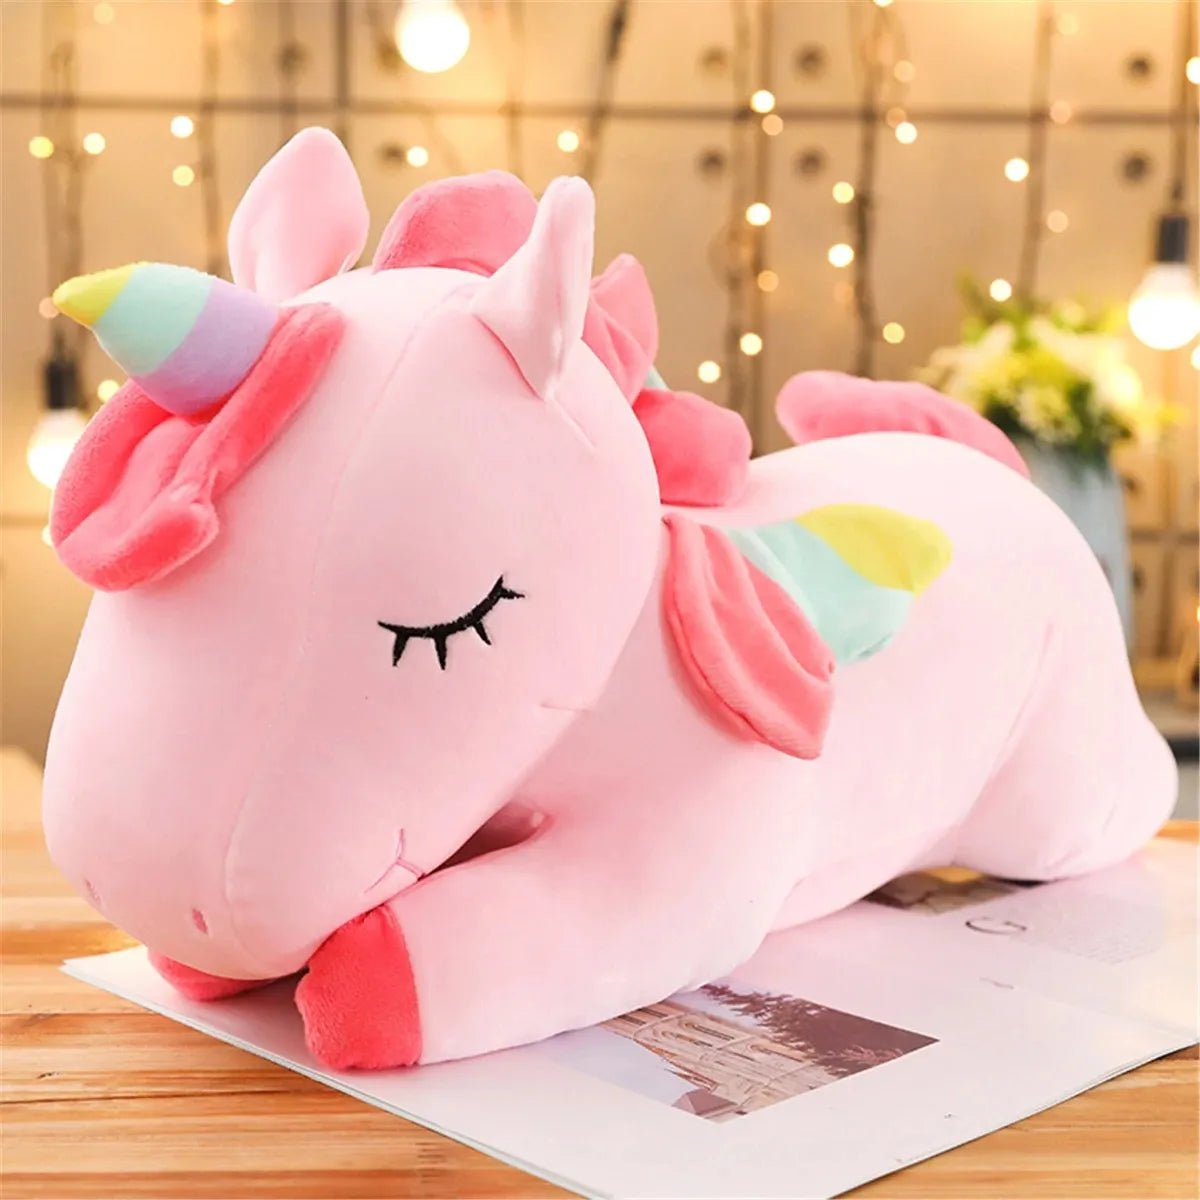 Cute Unicorn Plush Toy 25cm | Pink Stuffed Unicorn, Soft & Cute Teddy - VarietyGifts